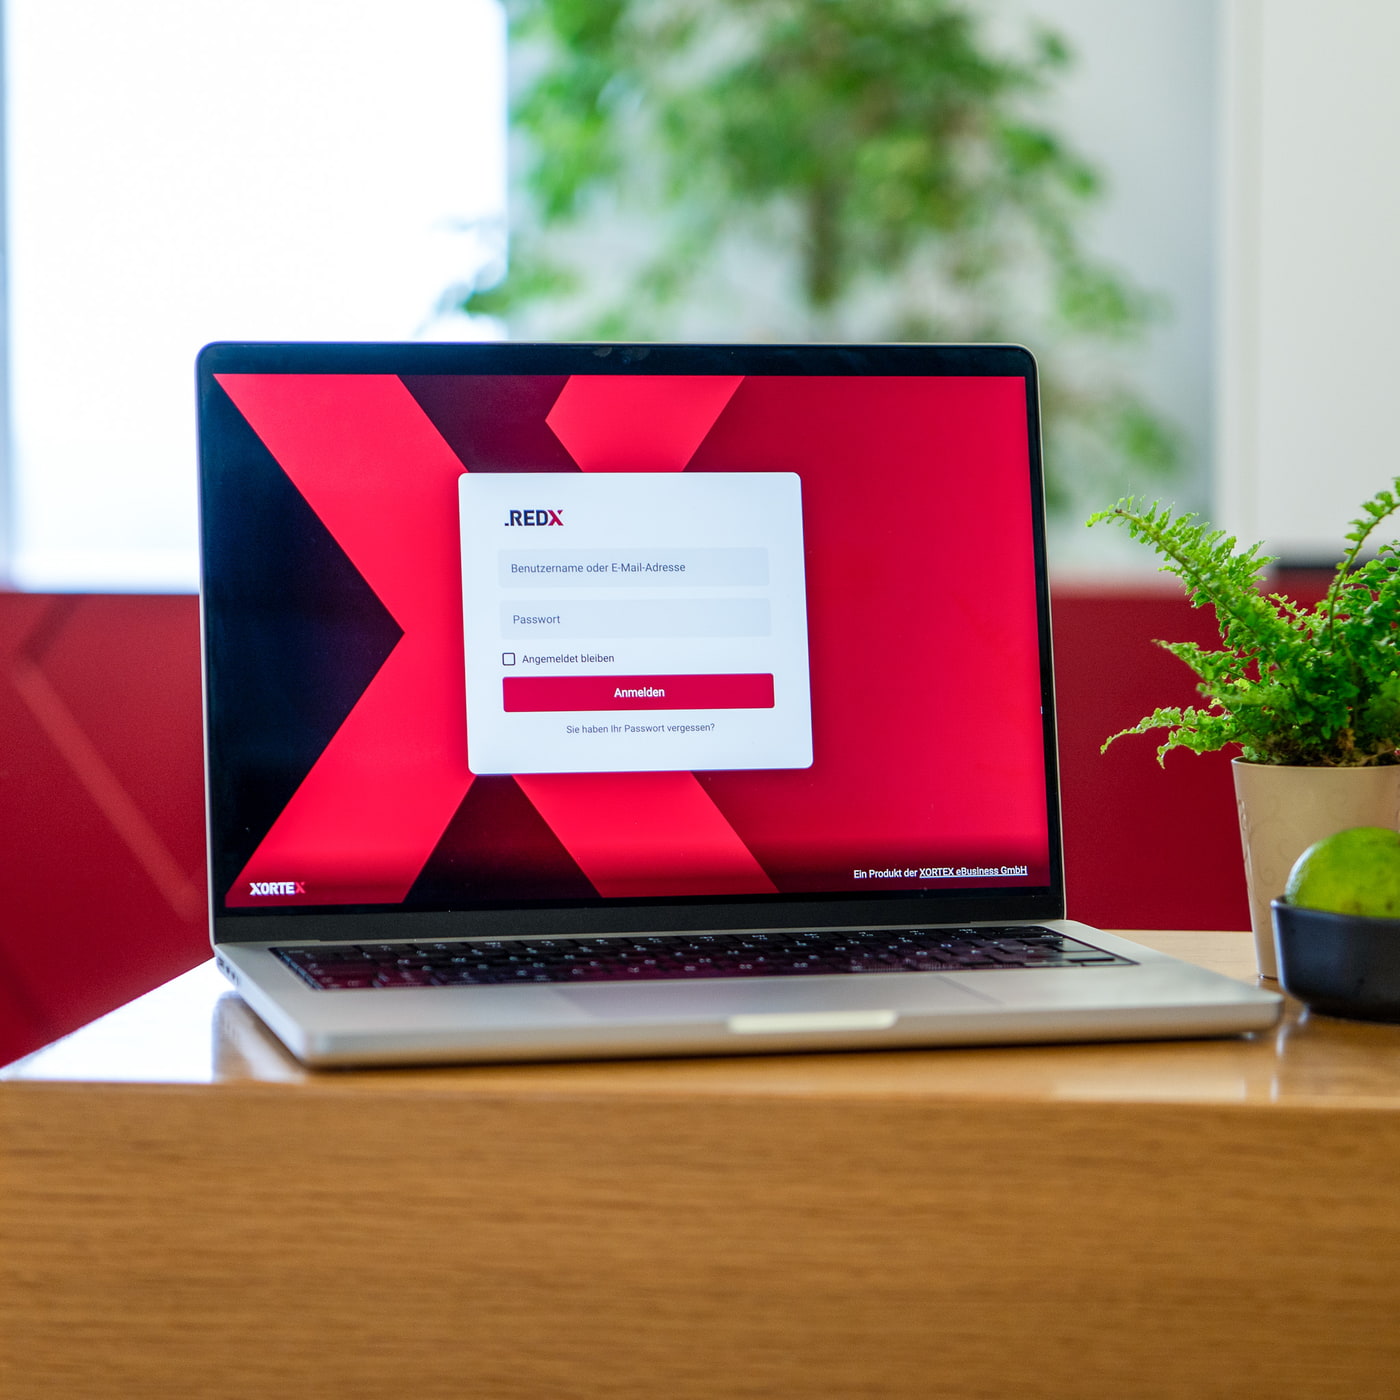 Laptop mit REDX-Backend-Login, Pflanze